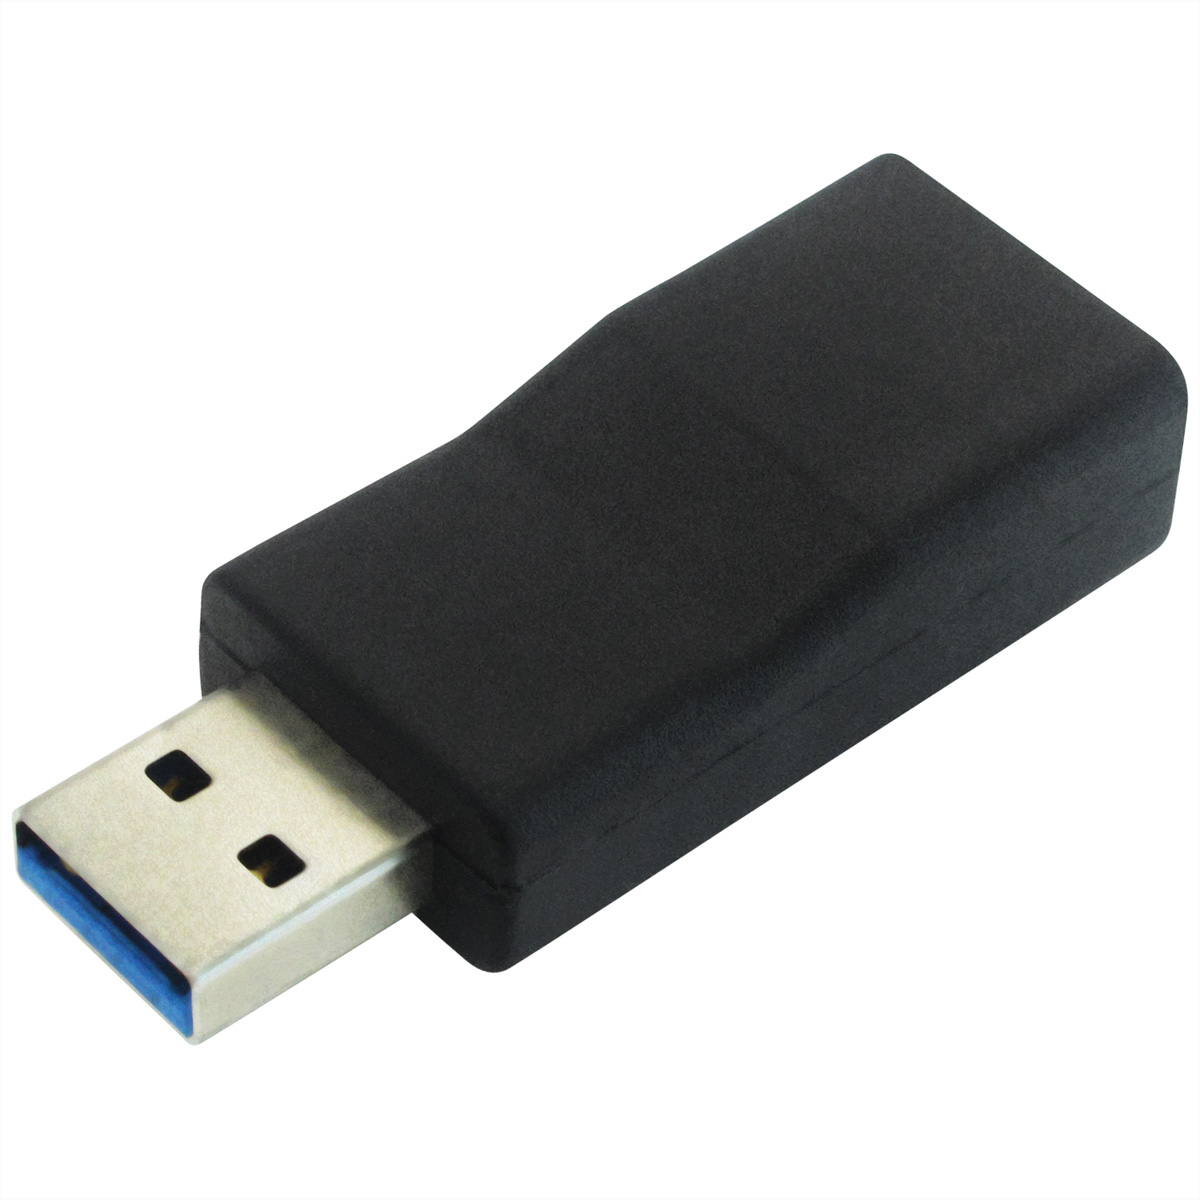 3.2 Adapter ROLINE - ST/BU Gen 1 A USB USB Adapter, C, Typ USB